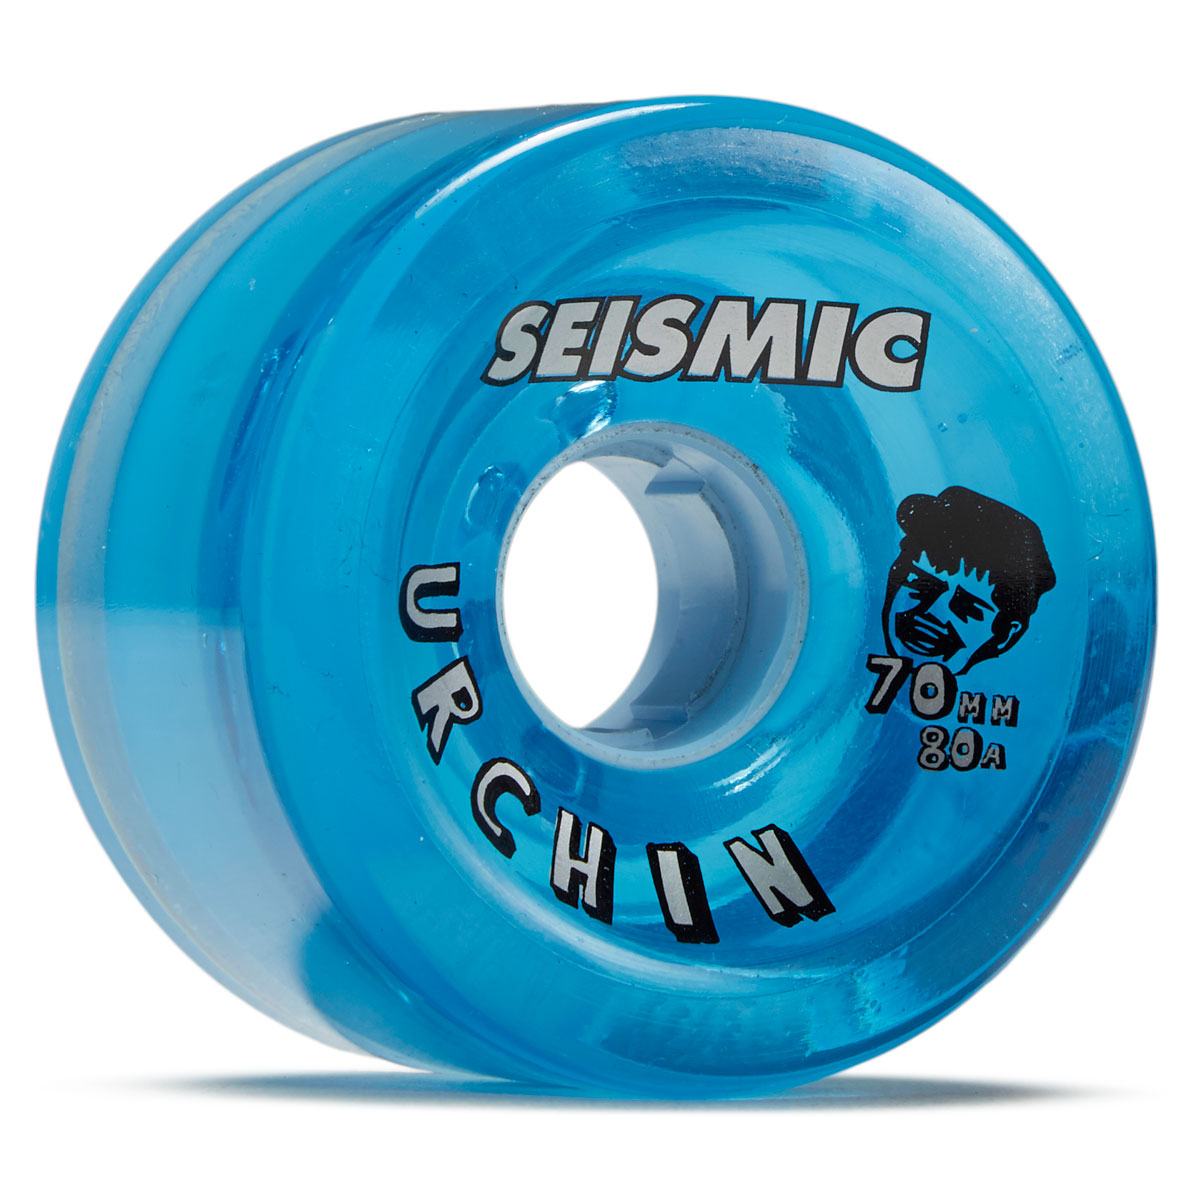 Seismic Urchin 80a Longboard Wheels - Clear Blue - 70mm image 1